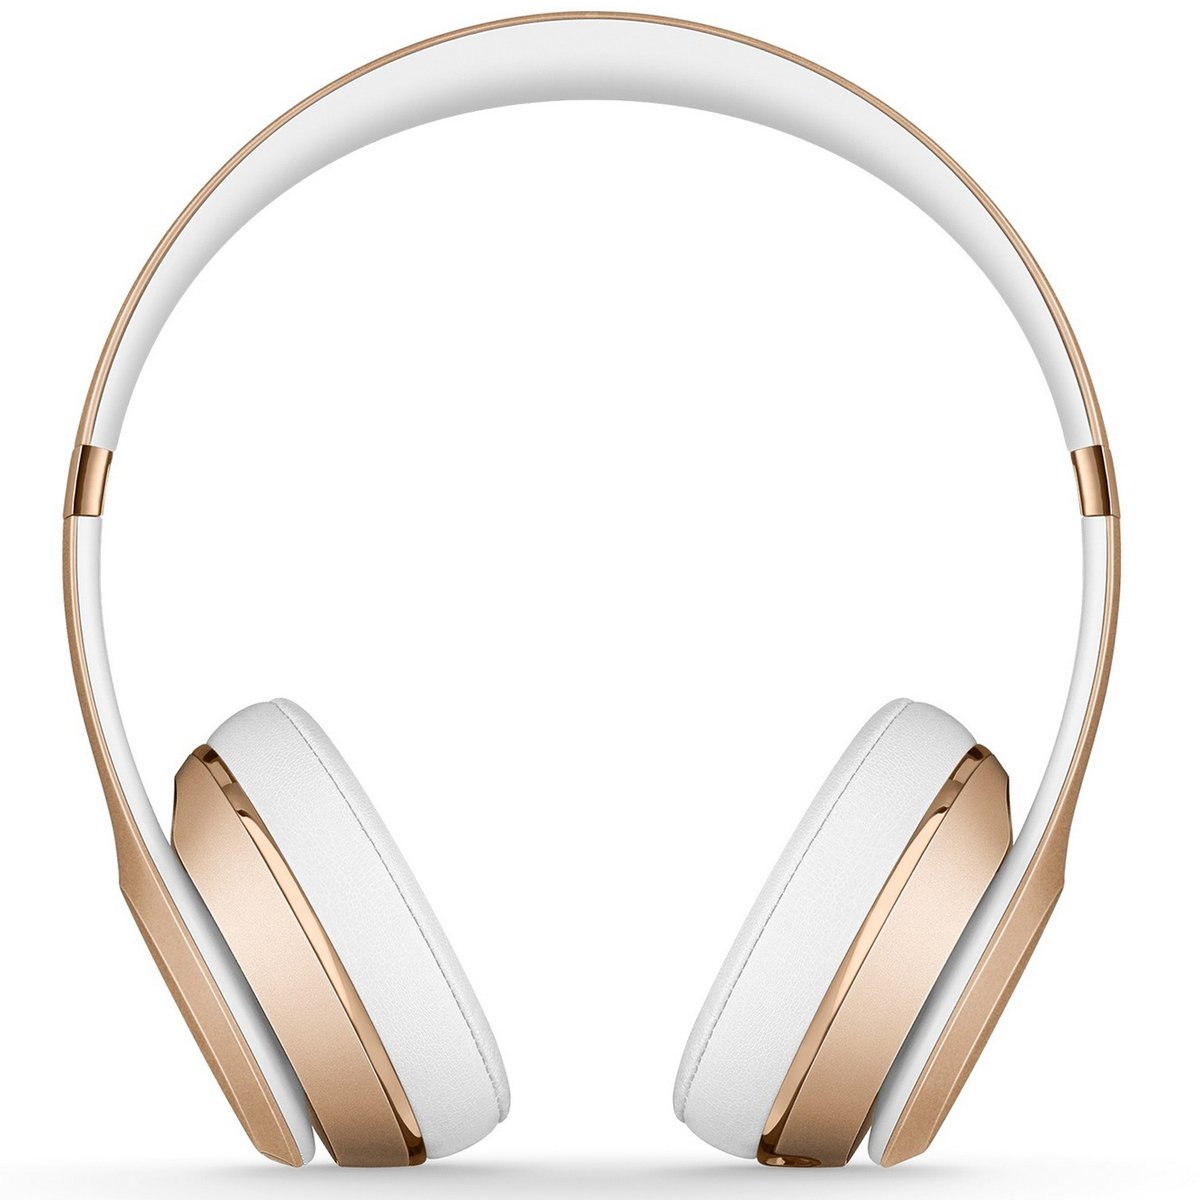 Beats Wireless Headphone SOLO-3 Gold